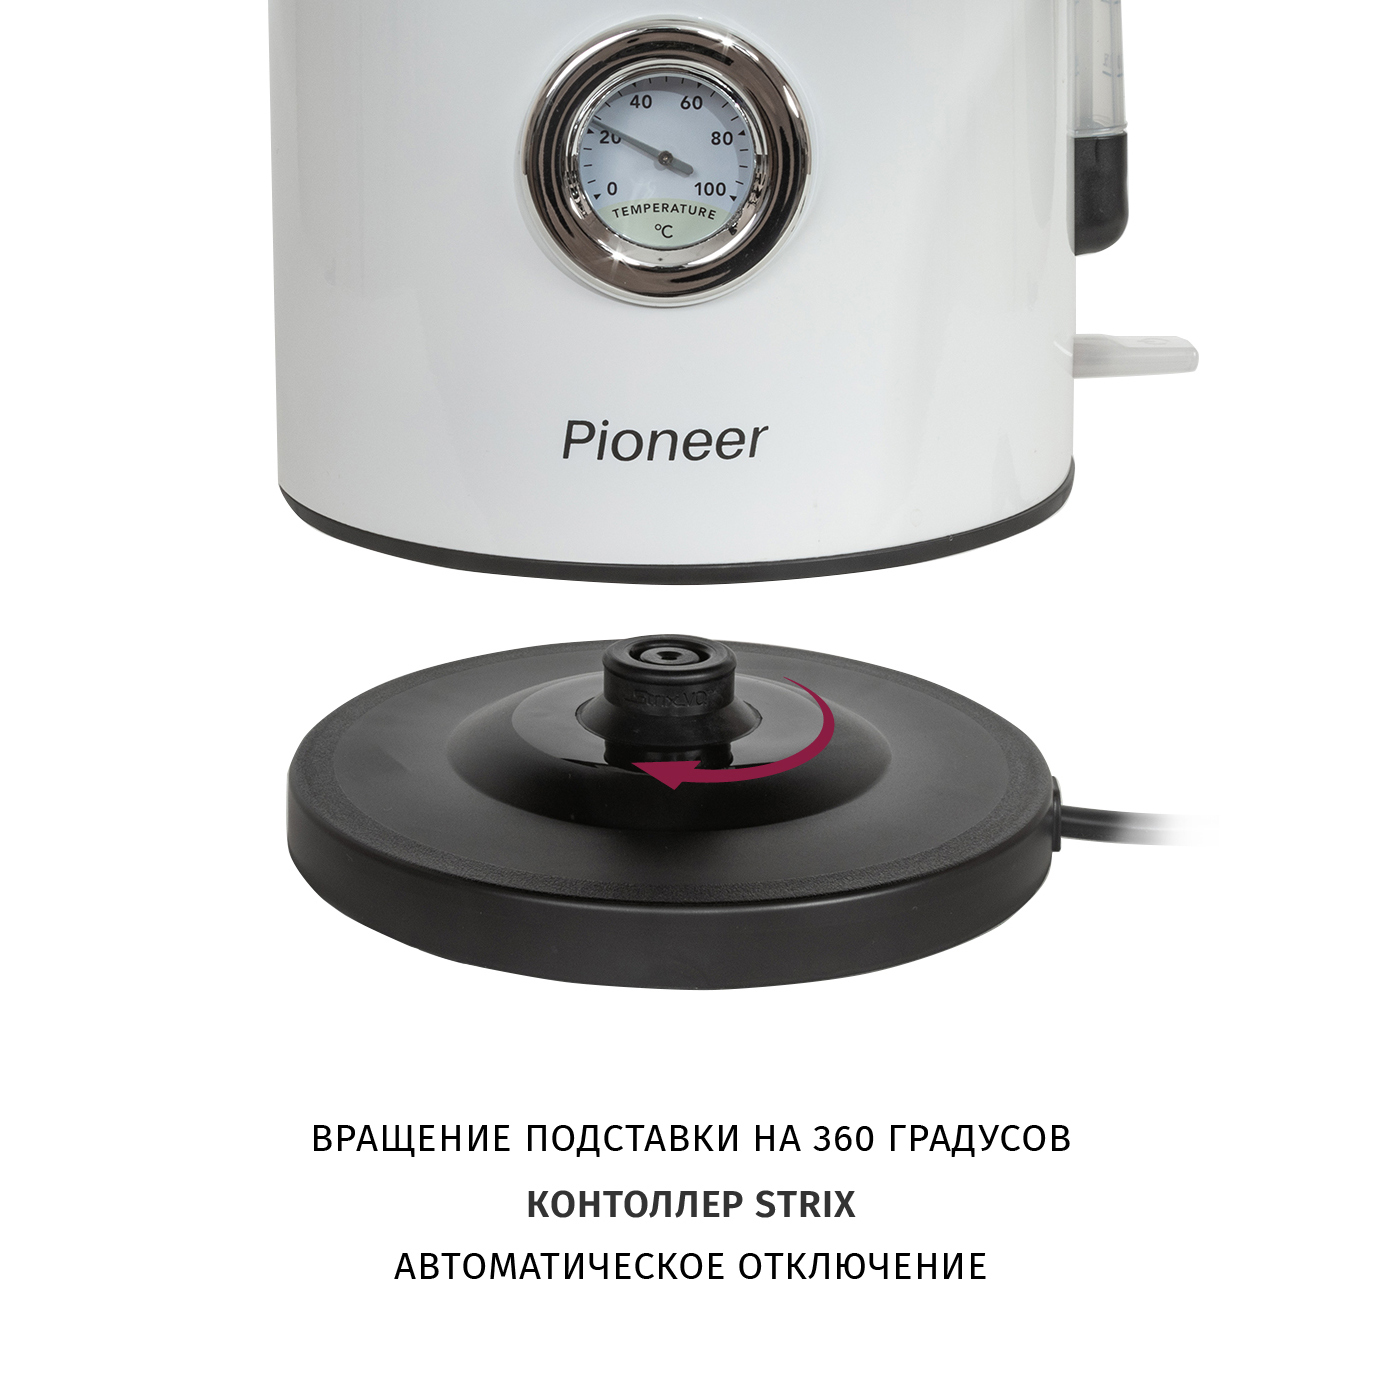 Чайник Pioneer KE560M white